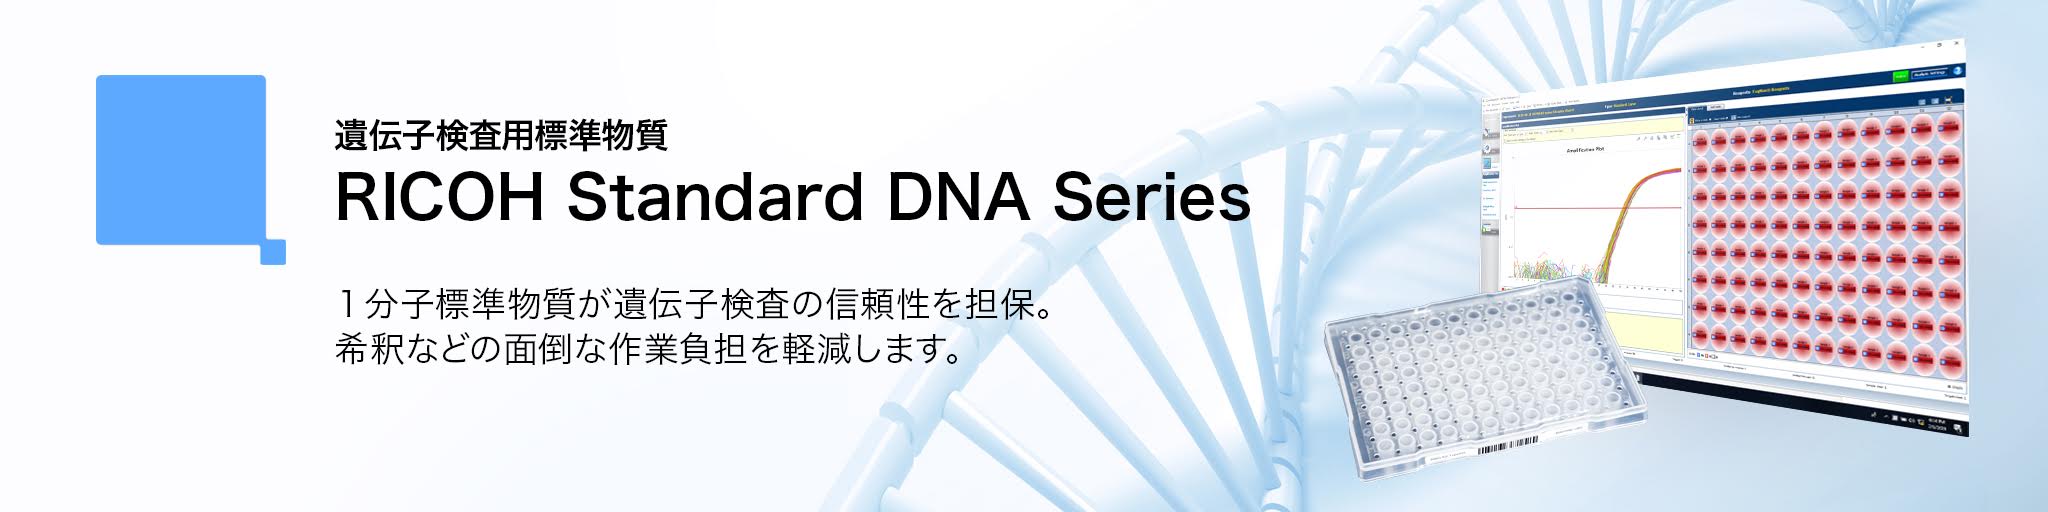 遺伝子検査用標準物質 RICOH Standard DNA Series